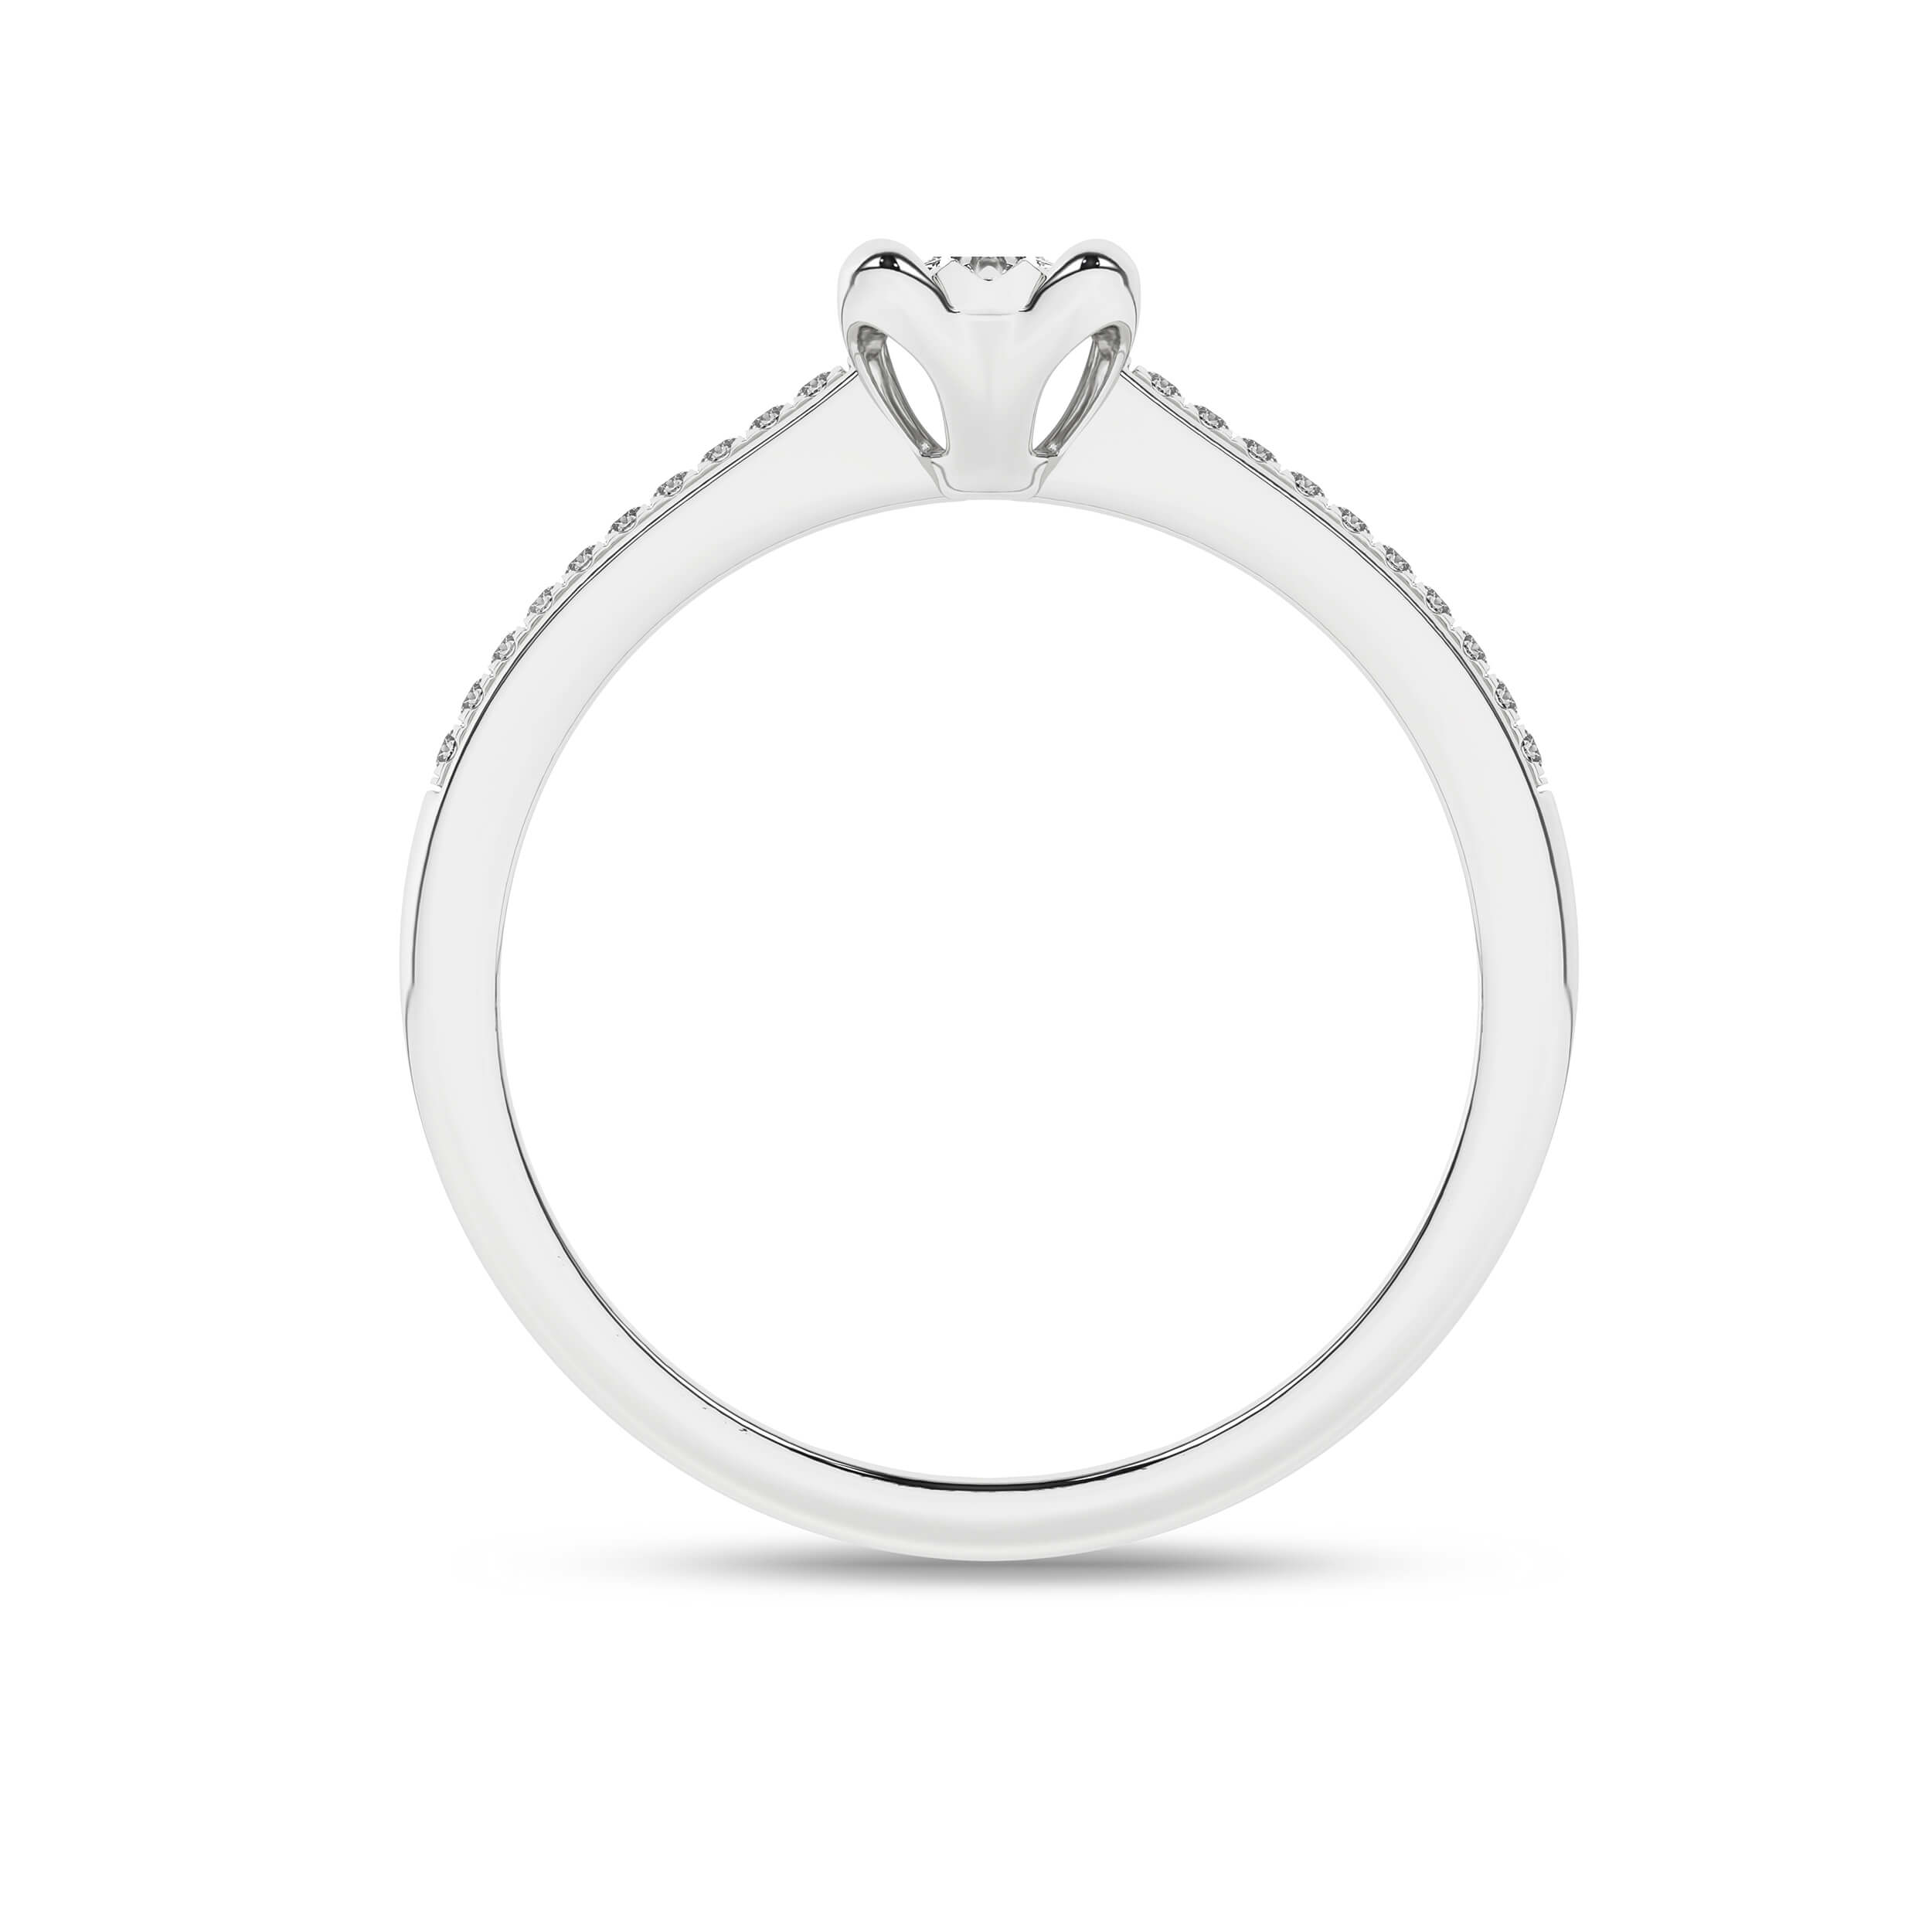 Inel de logodna din Aur Alb 14K cu Diamante 0.15Ct, articol RF11930, previzualizare foto 3